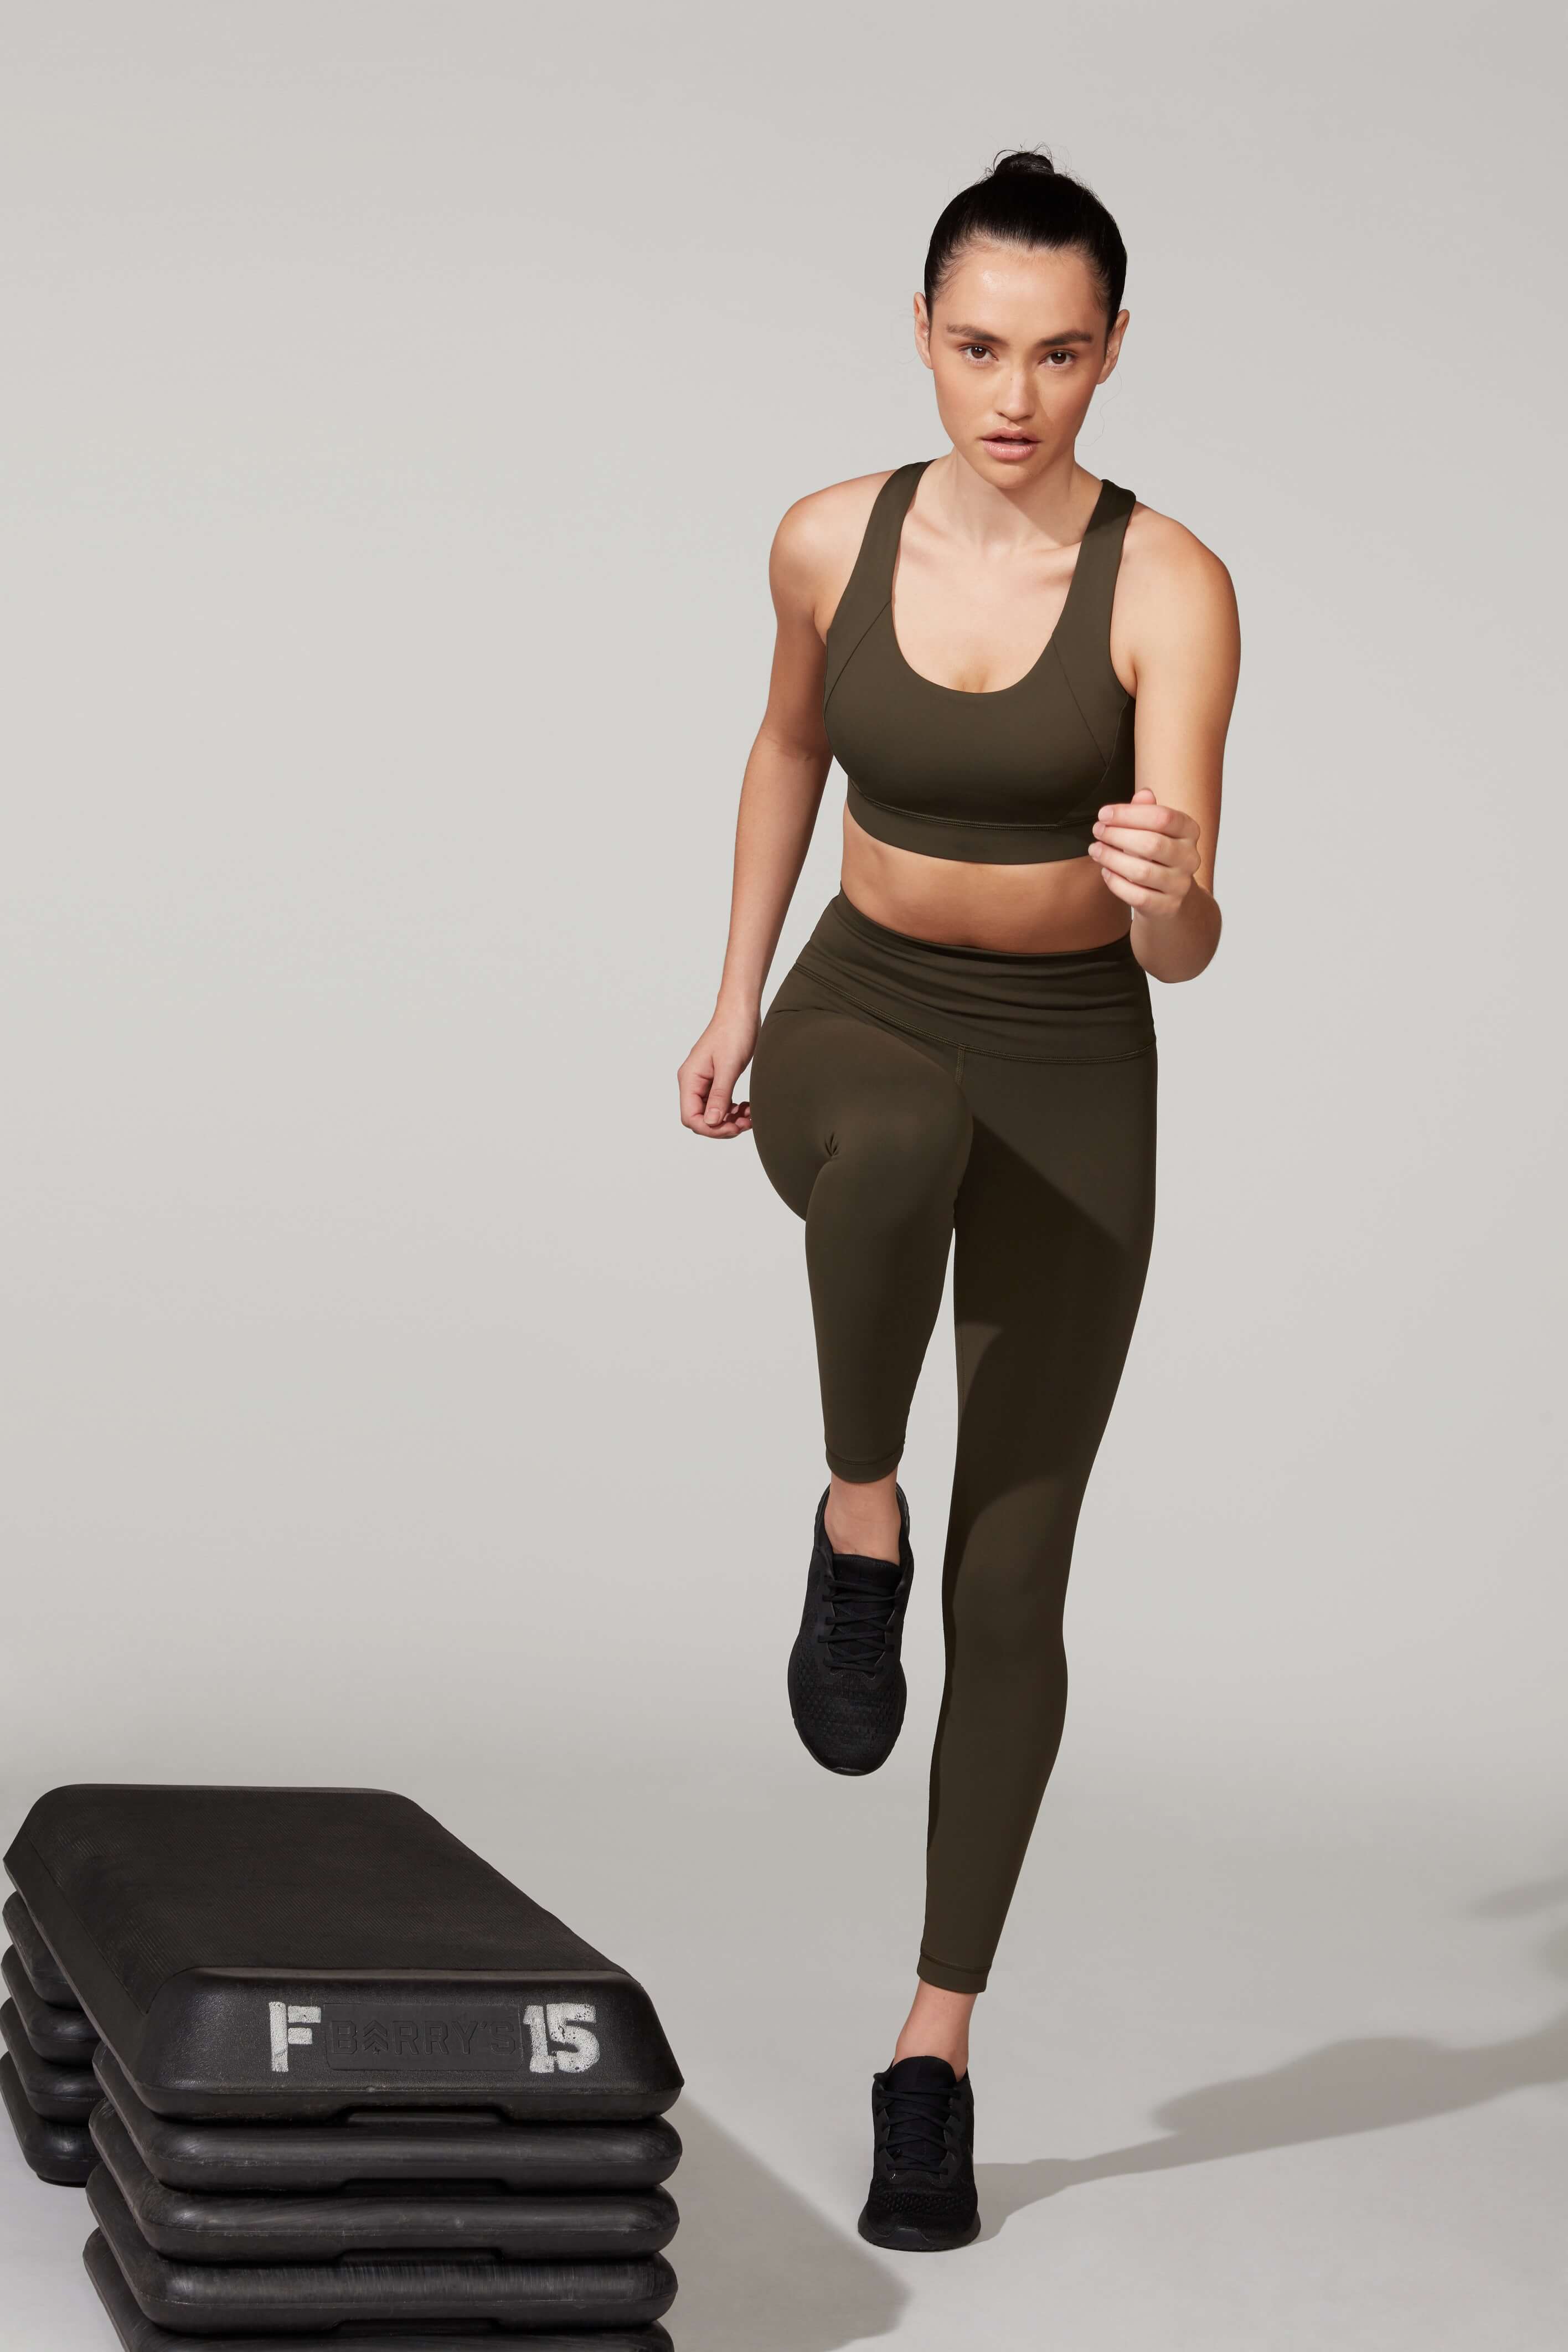 A female model in a jogging position with brown color jogging attire